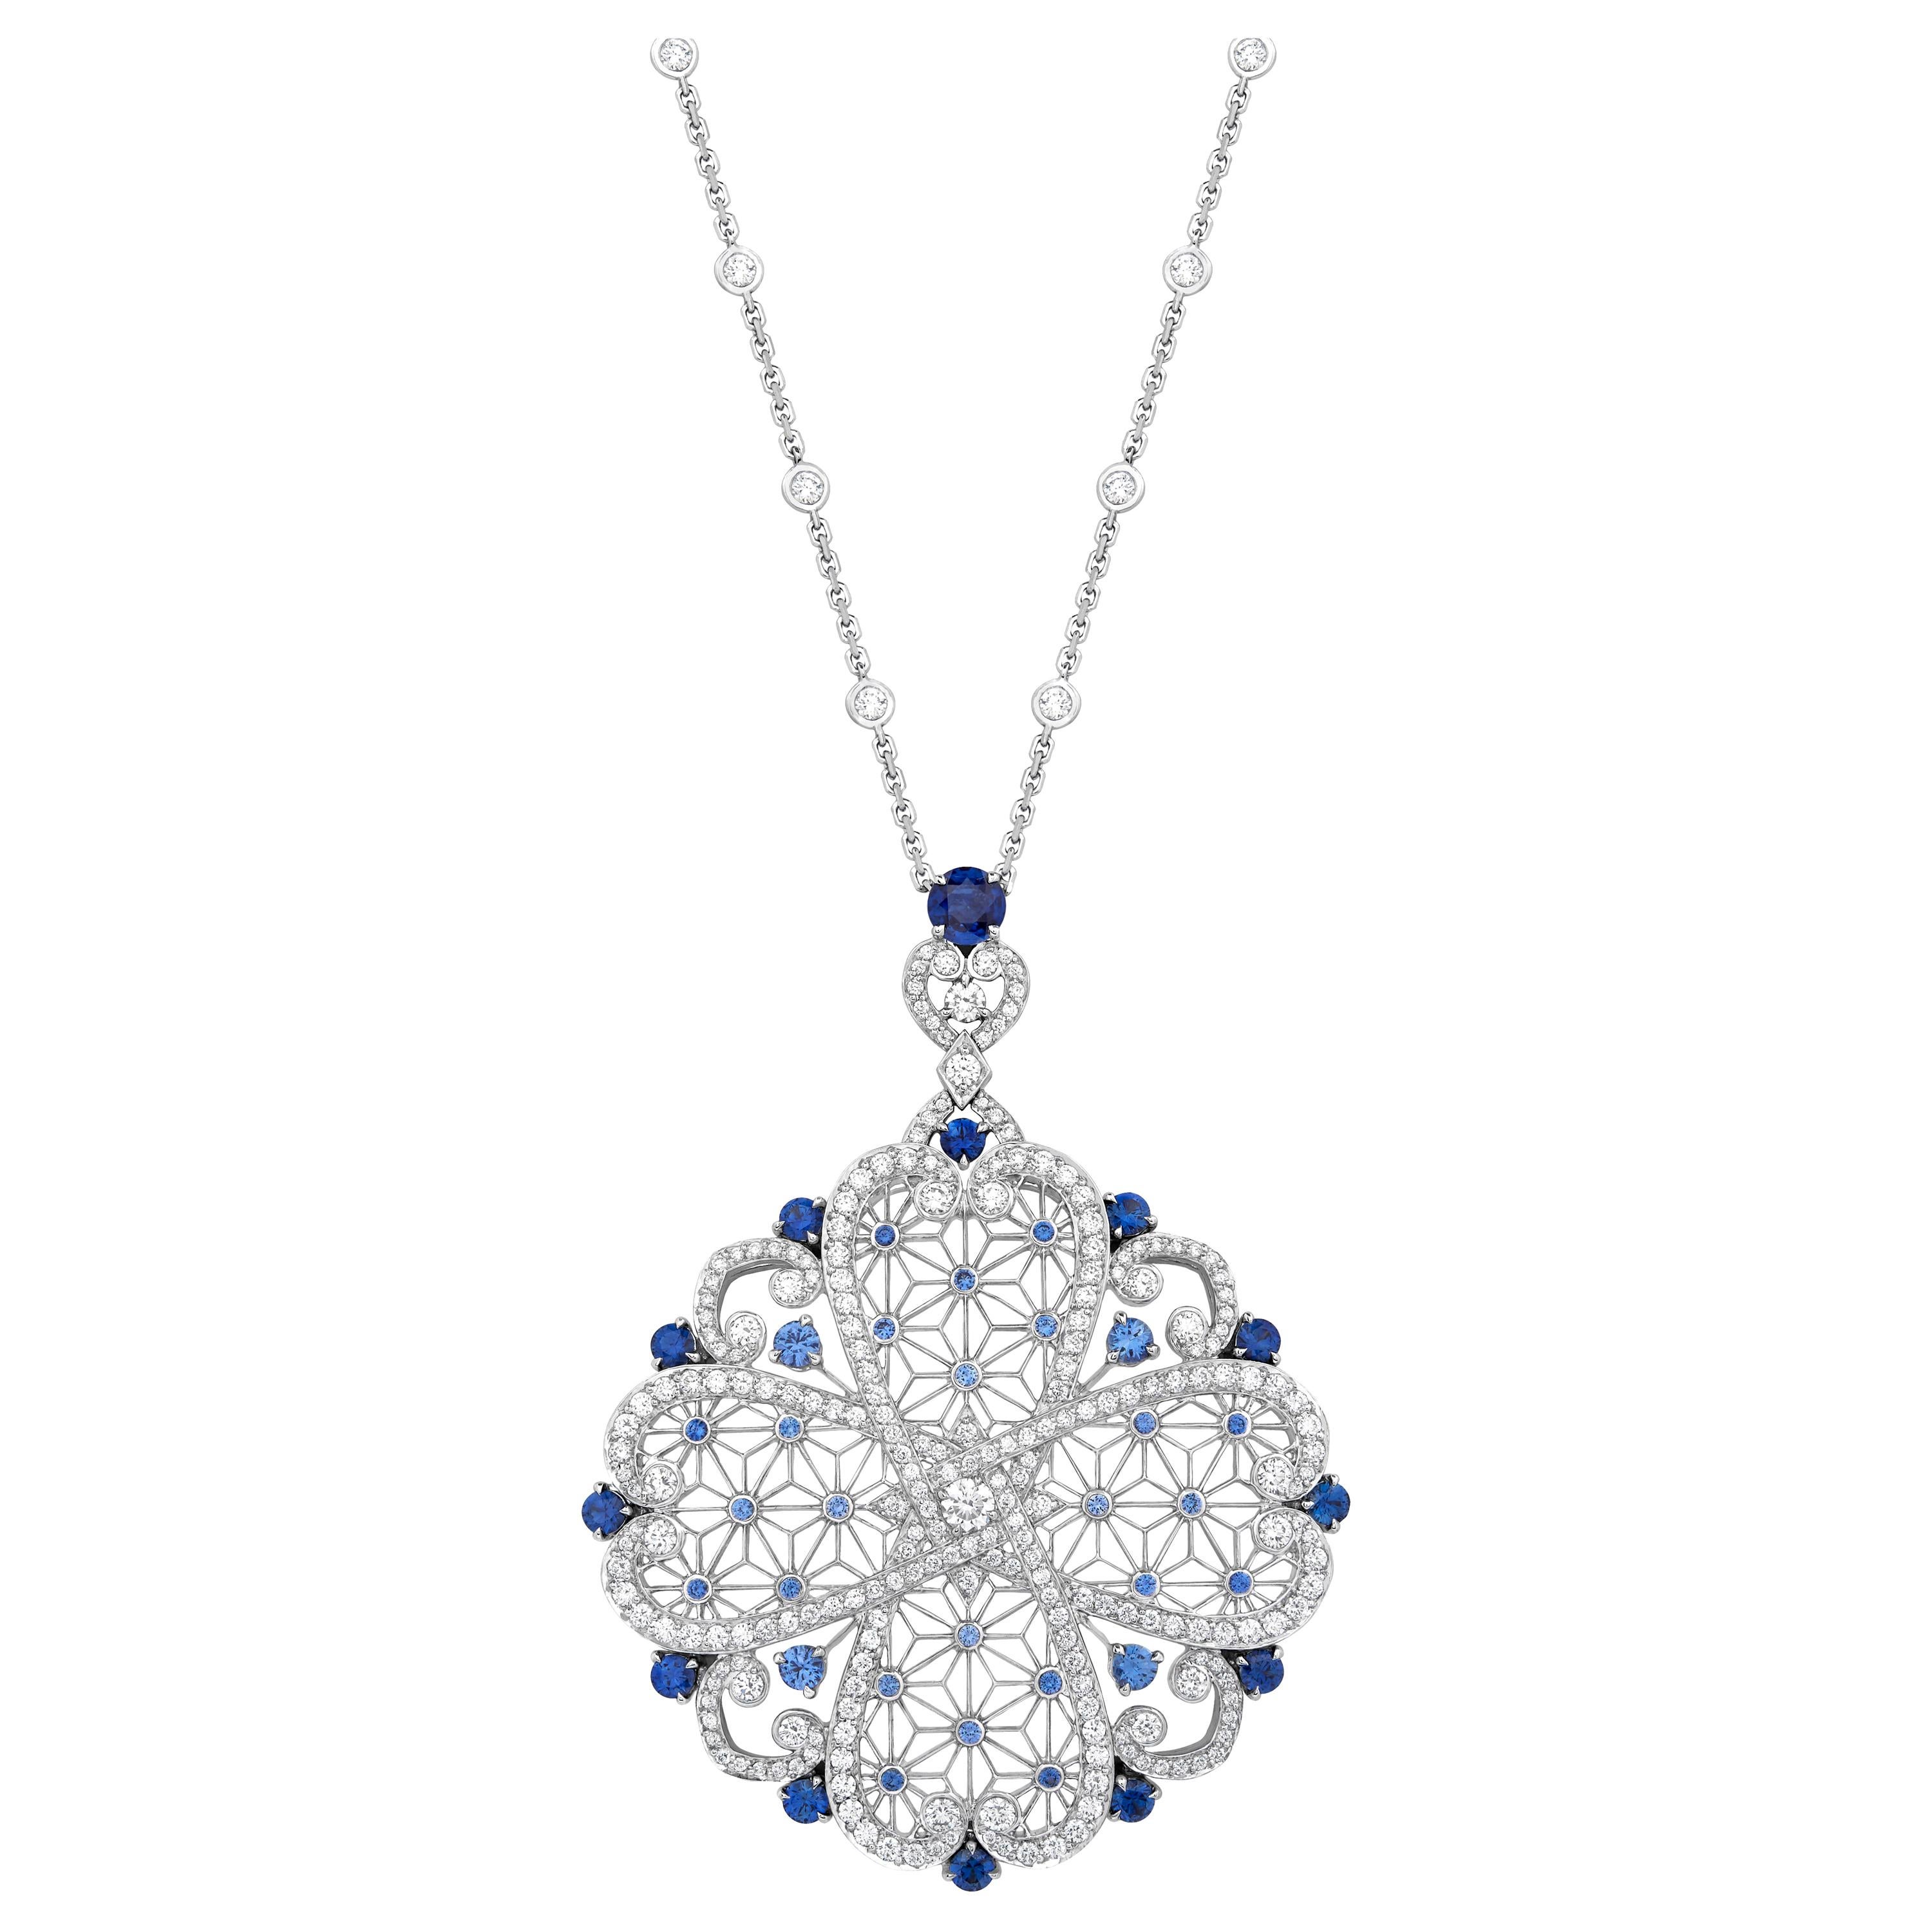 Garrard 'Muse' Filigree 18 Karat White Gold Diamond and Blue Sapphire Necklace For Sale